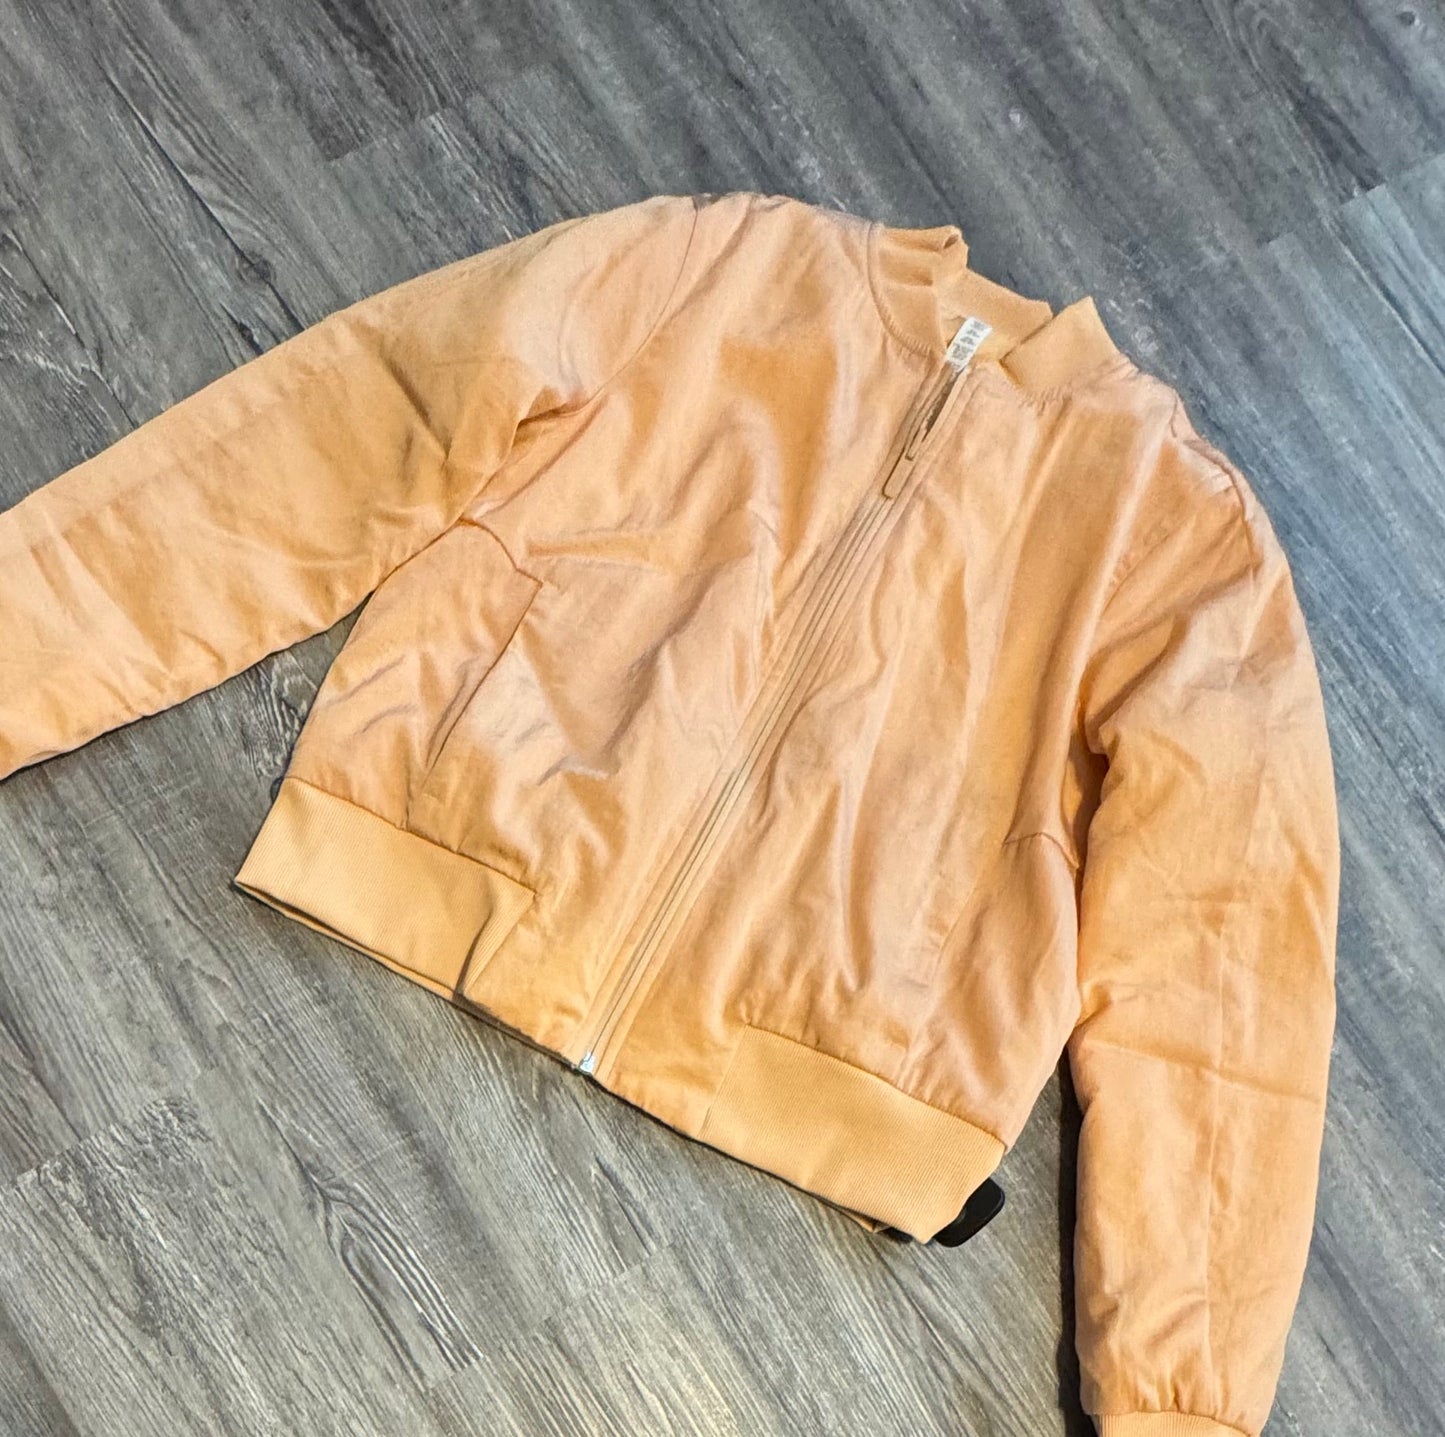 Jacket Other By Lululemon  Size: 10